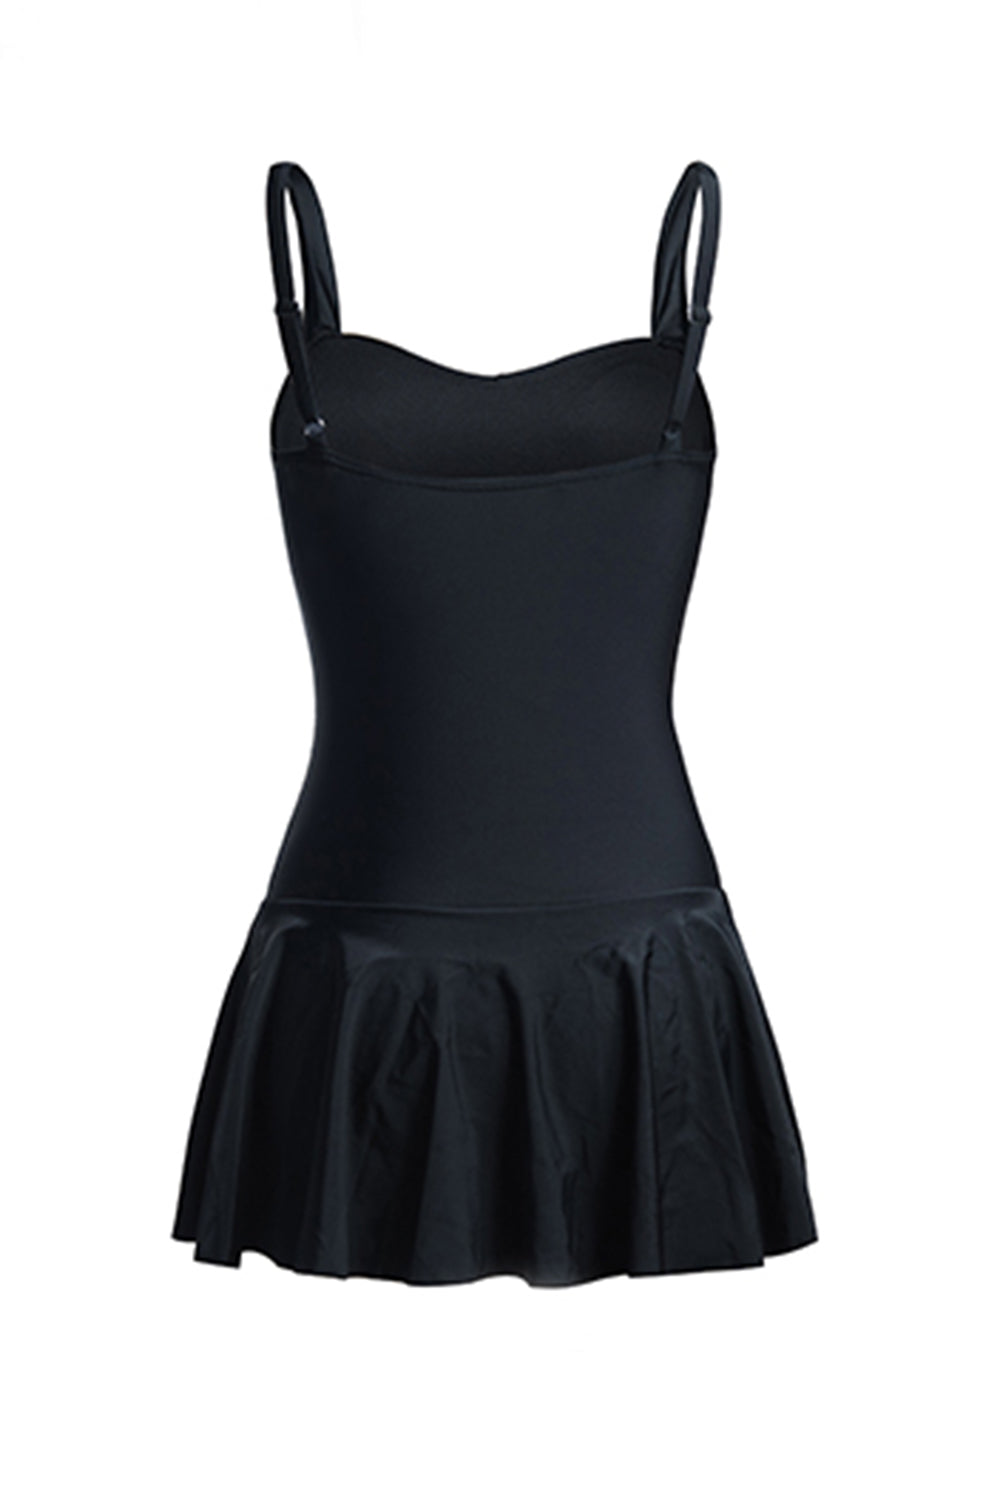 EZI Black Close-fitting With Shirring One-piece Swimsuit – Iyasson